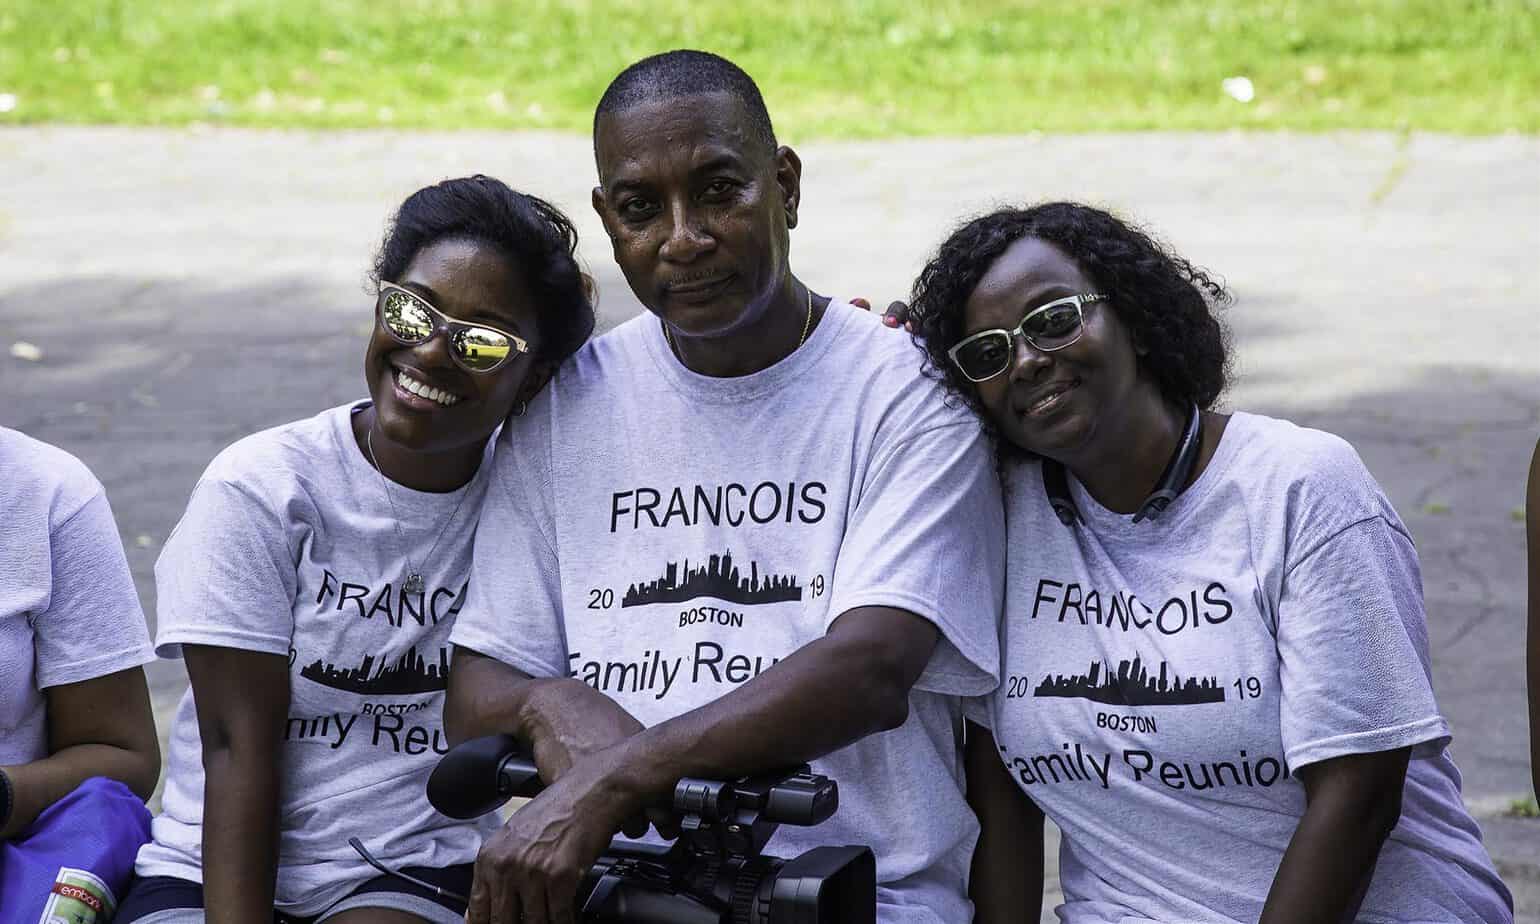 The Francois Family